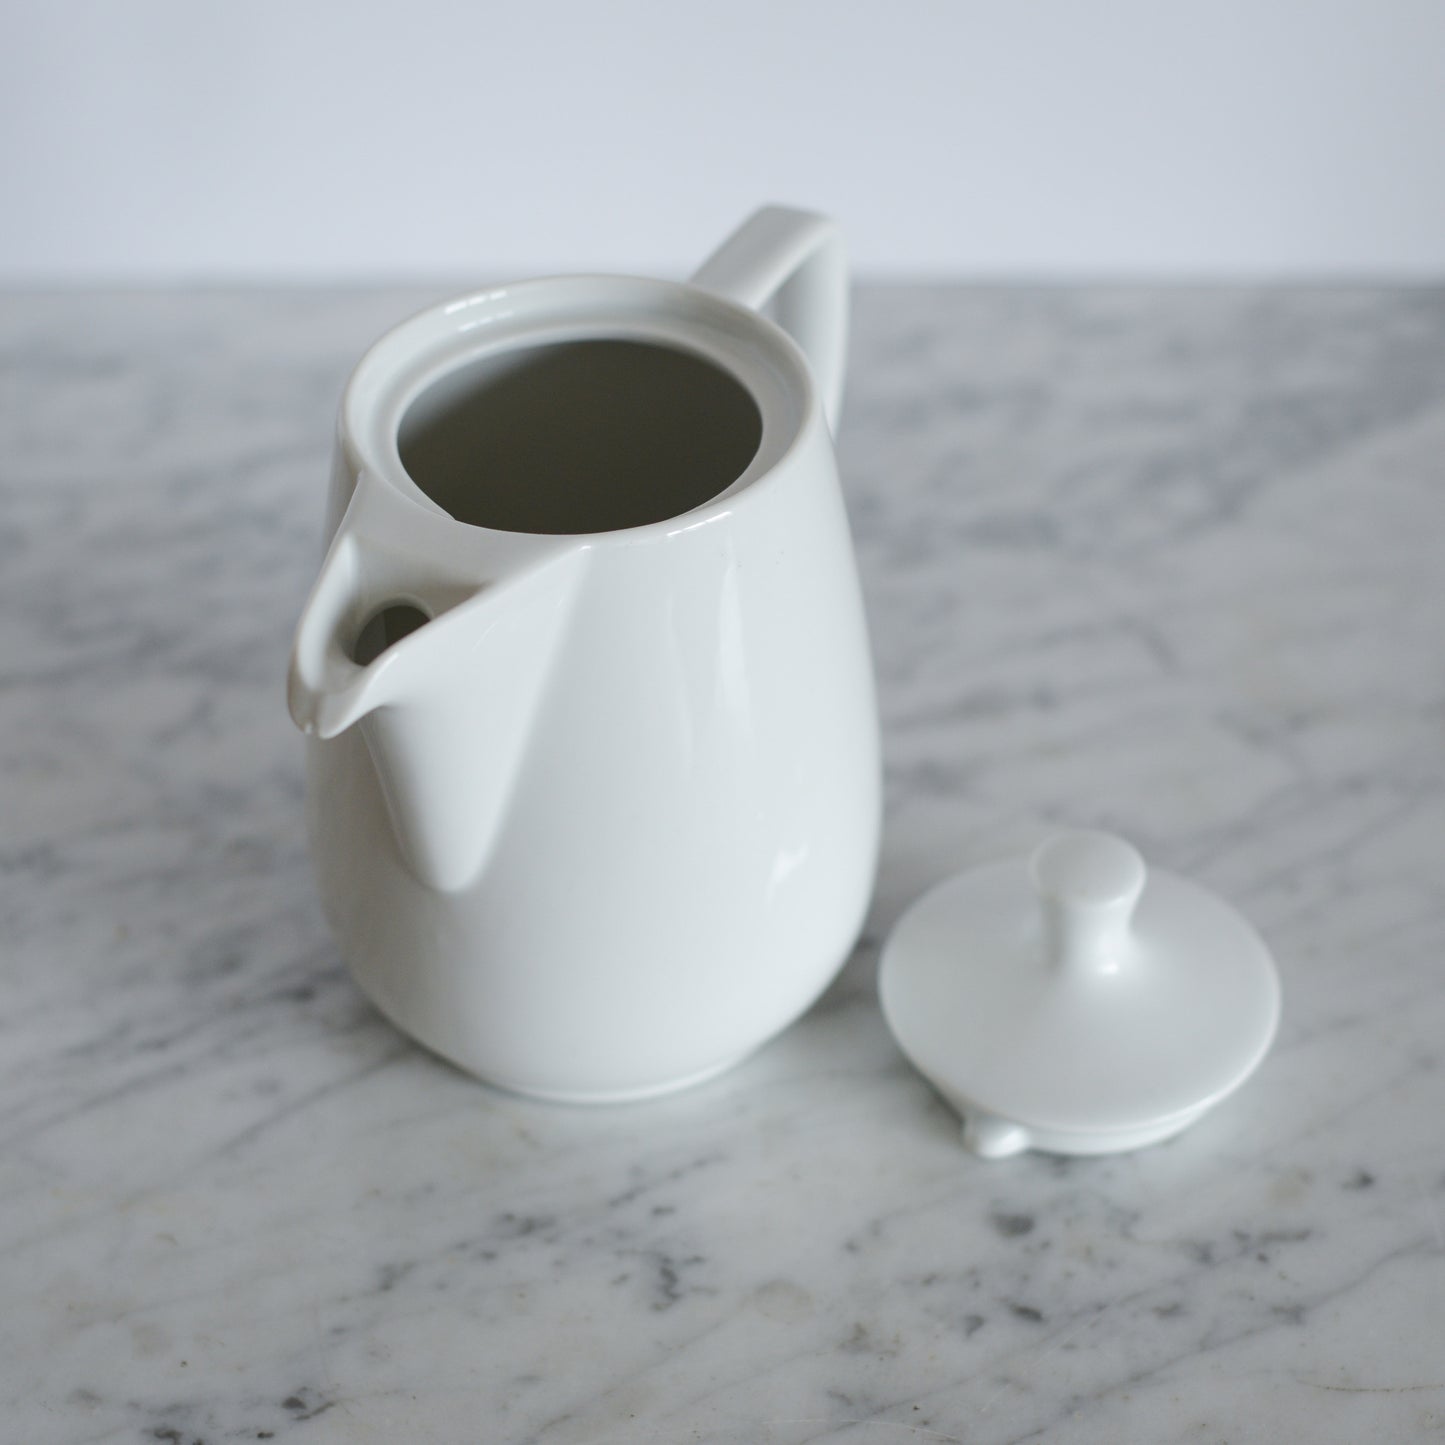 Melitta White Porcelain Coffee Carafe, Germany